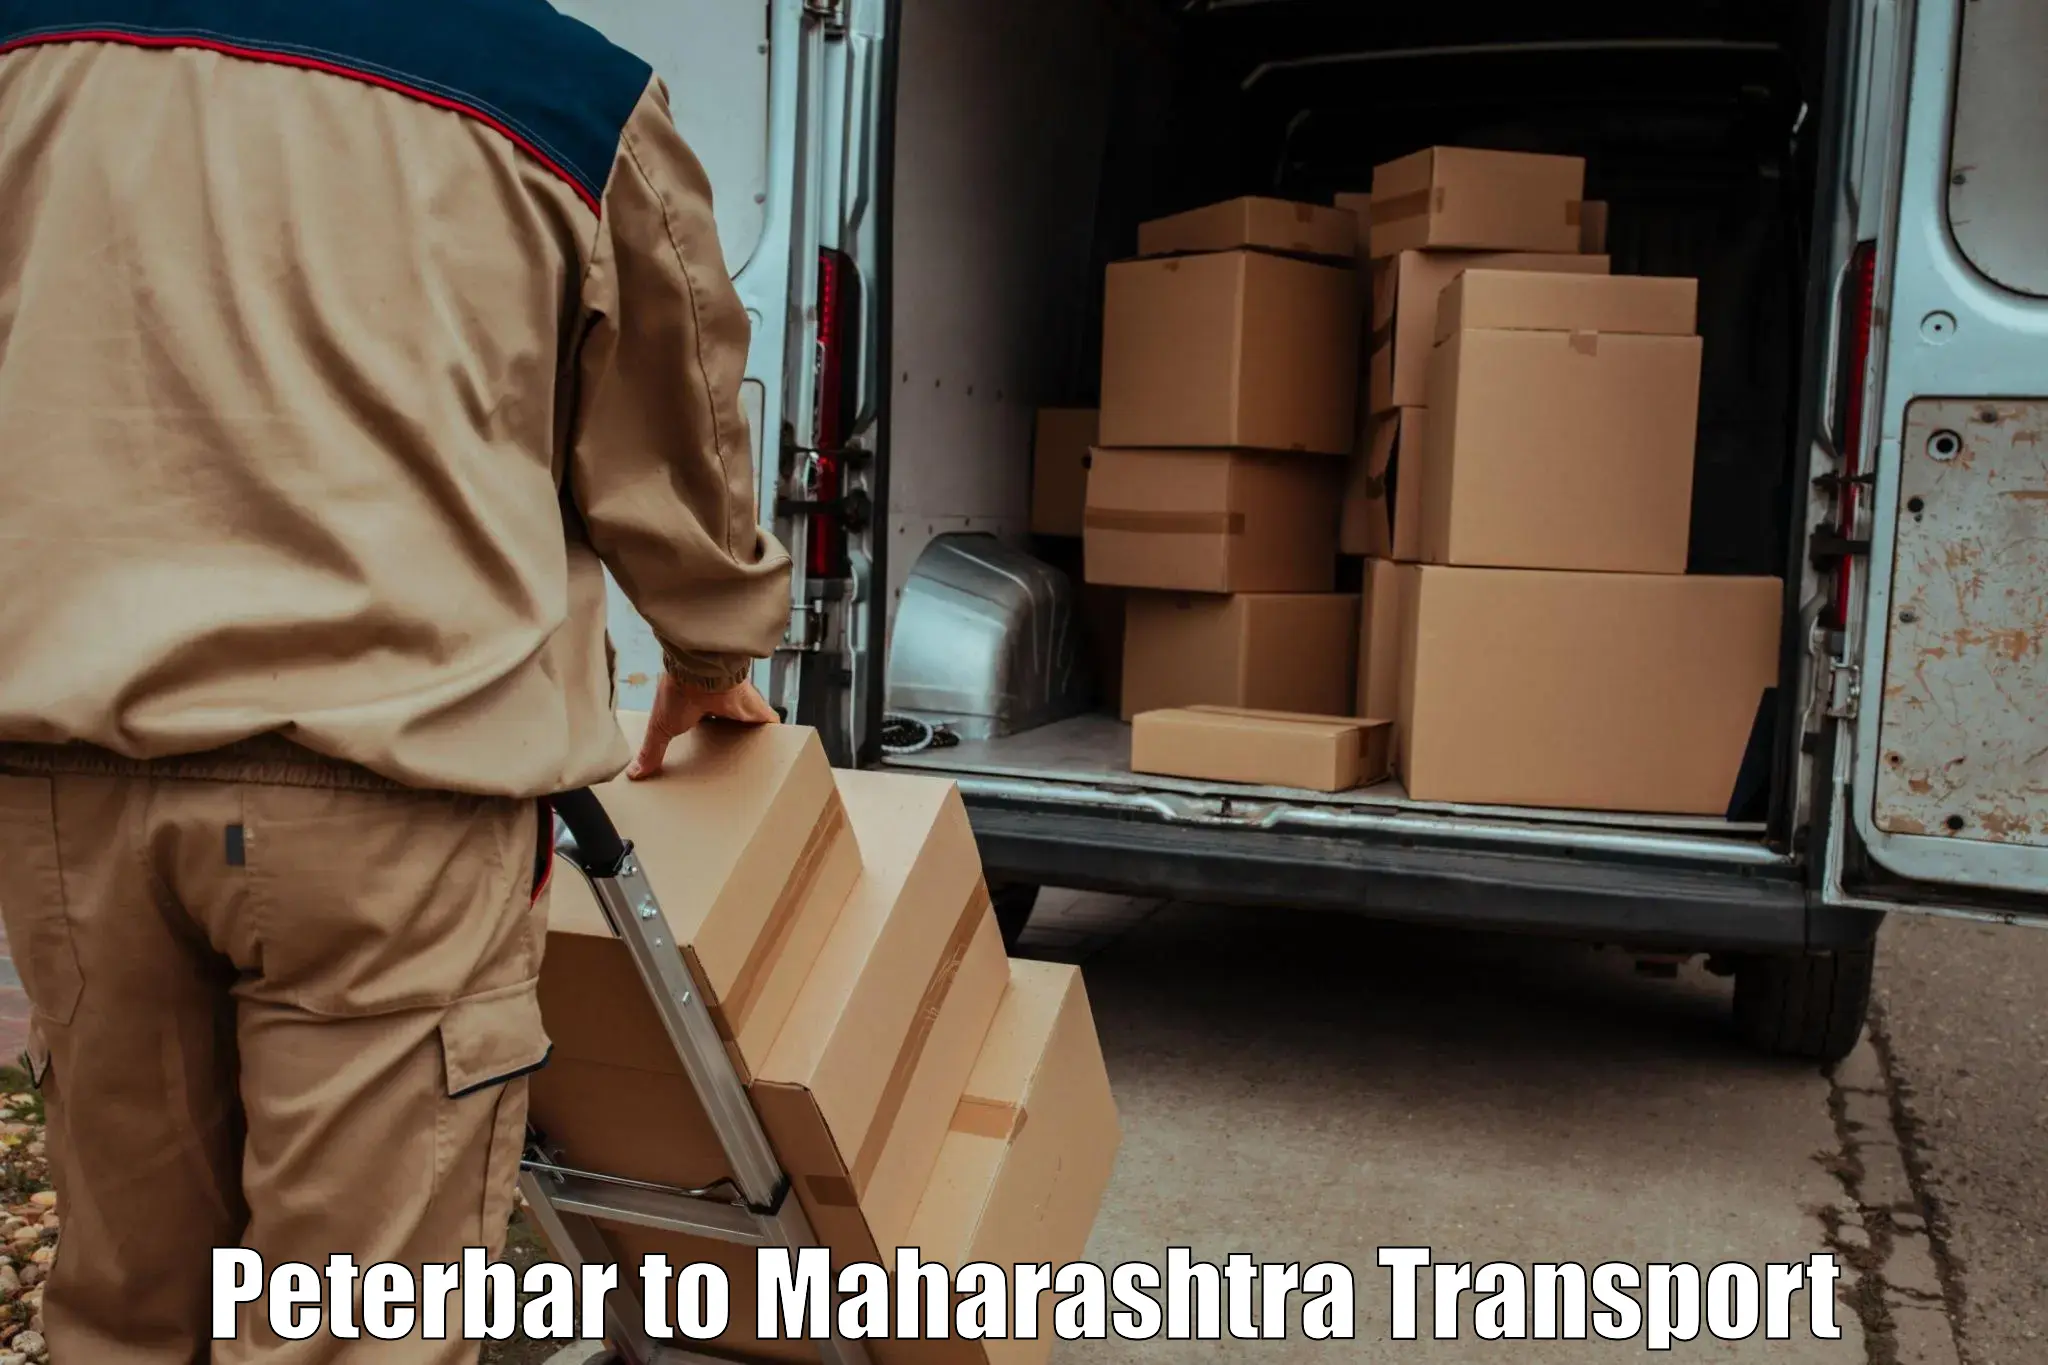 Transport shared services Peterbar to Khandala Pune